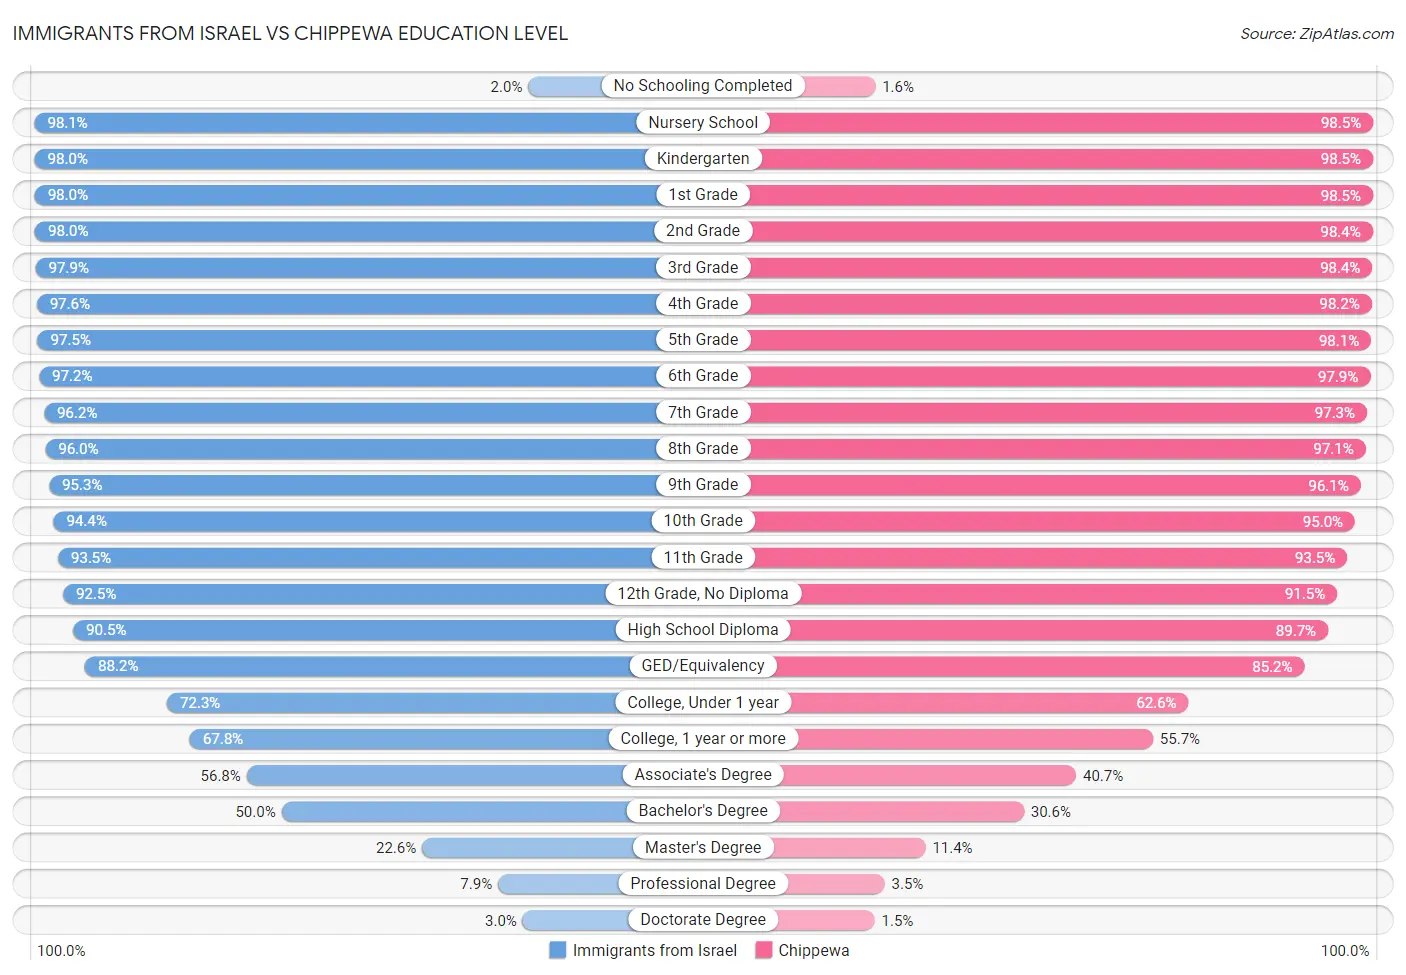 Immigrants from Israel vs Chippewa Education Level